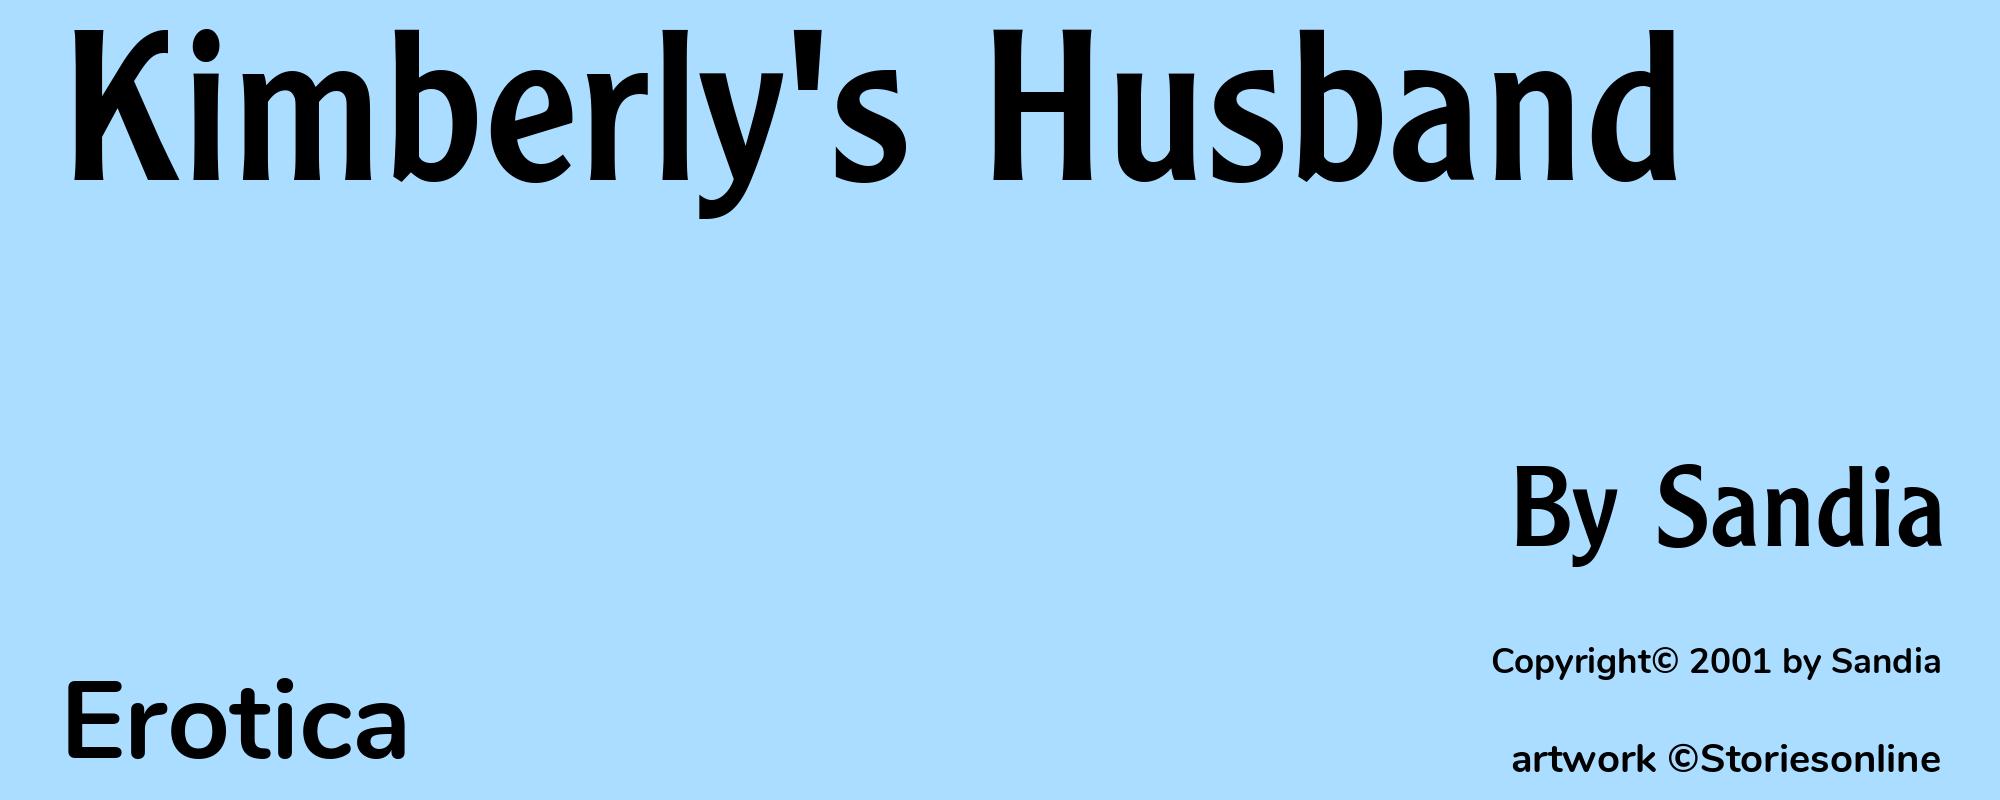 Kimberly's Husband - Cover